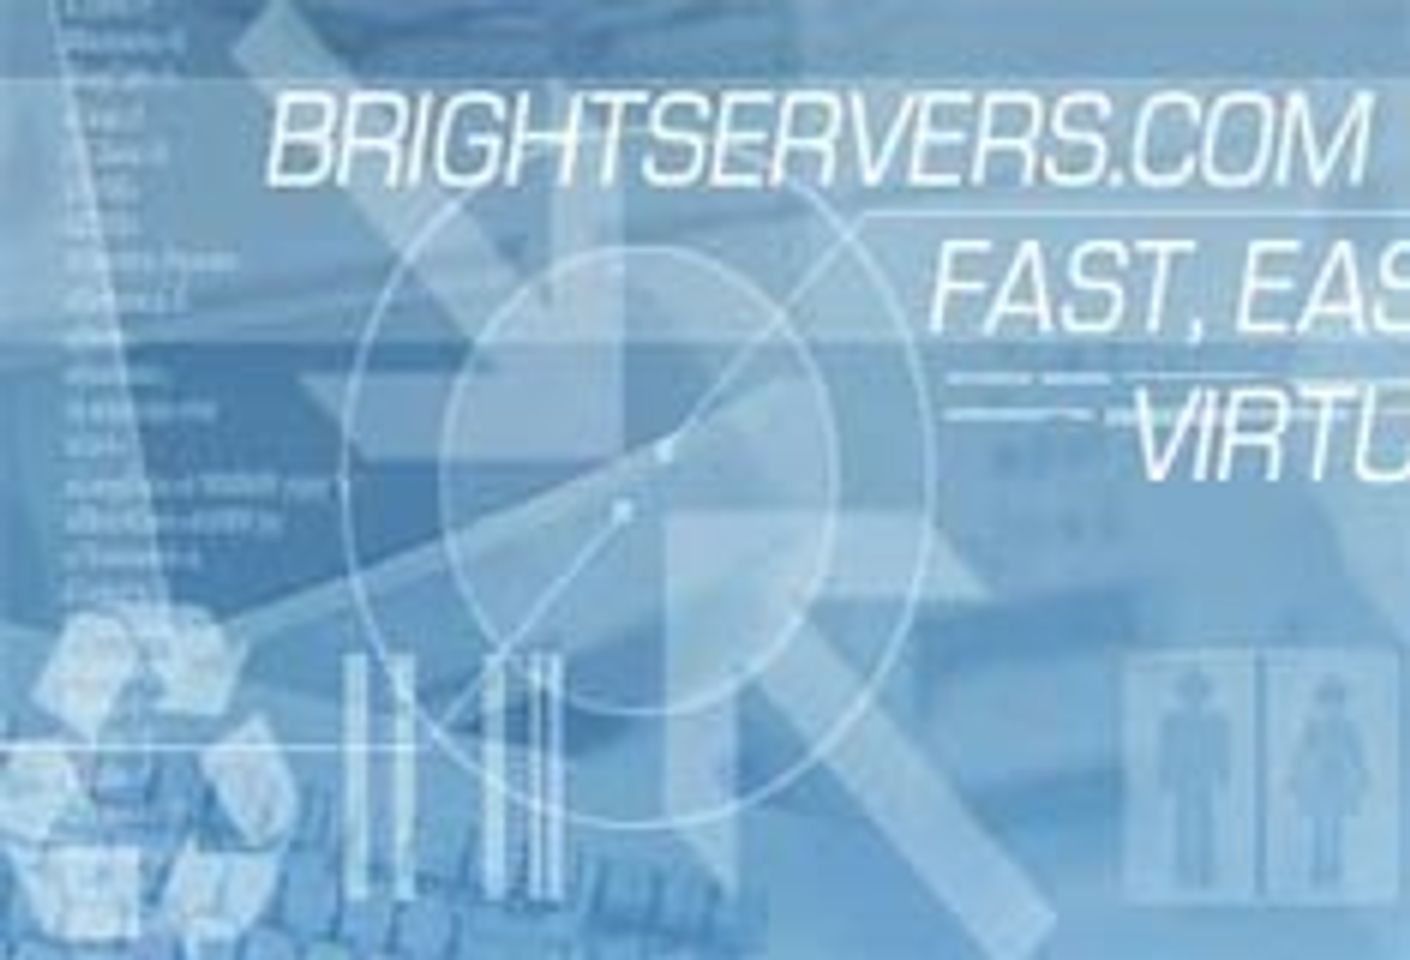 Bright Servers Offer Bright Ideas